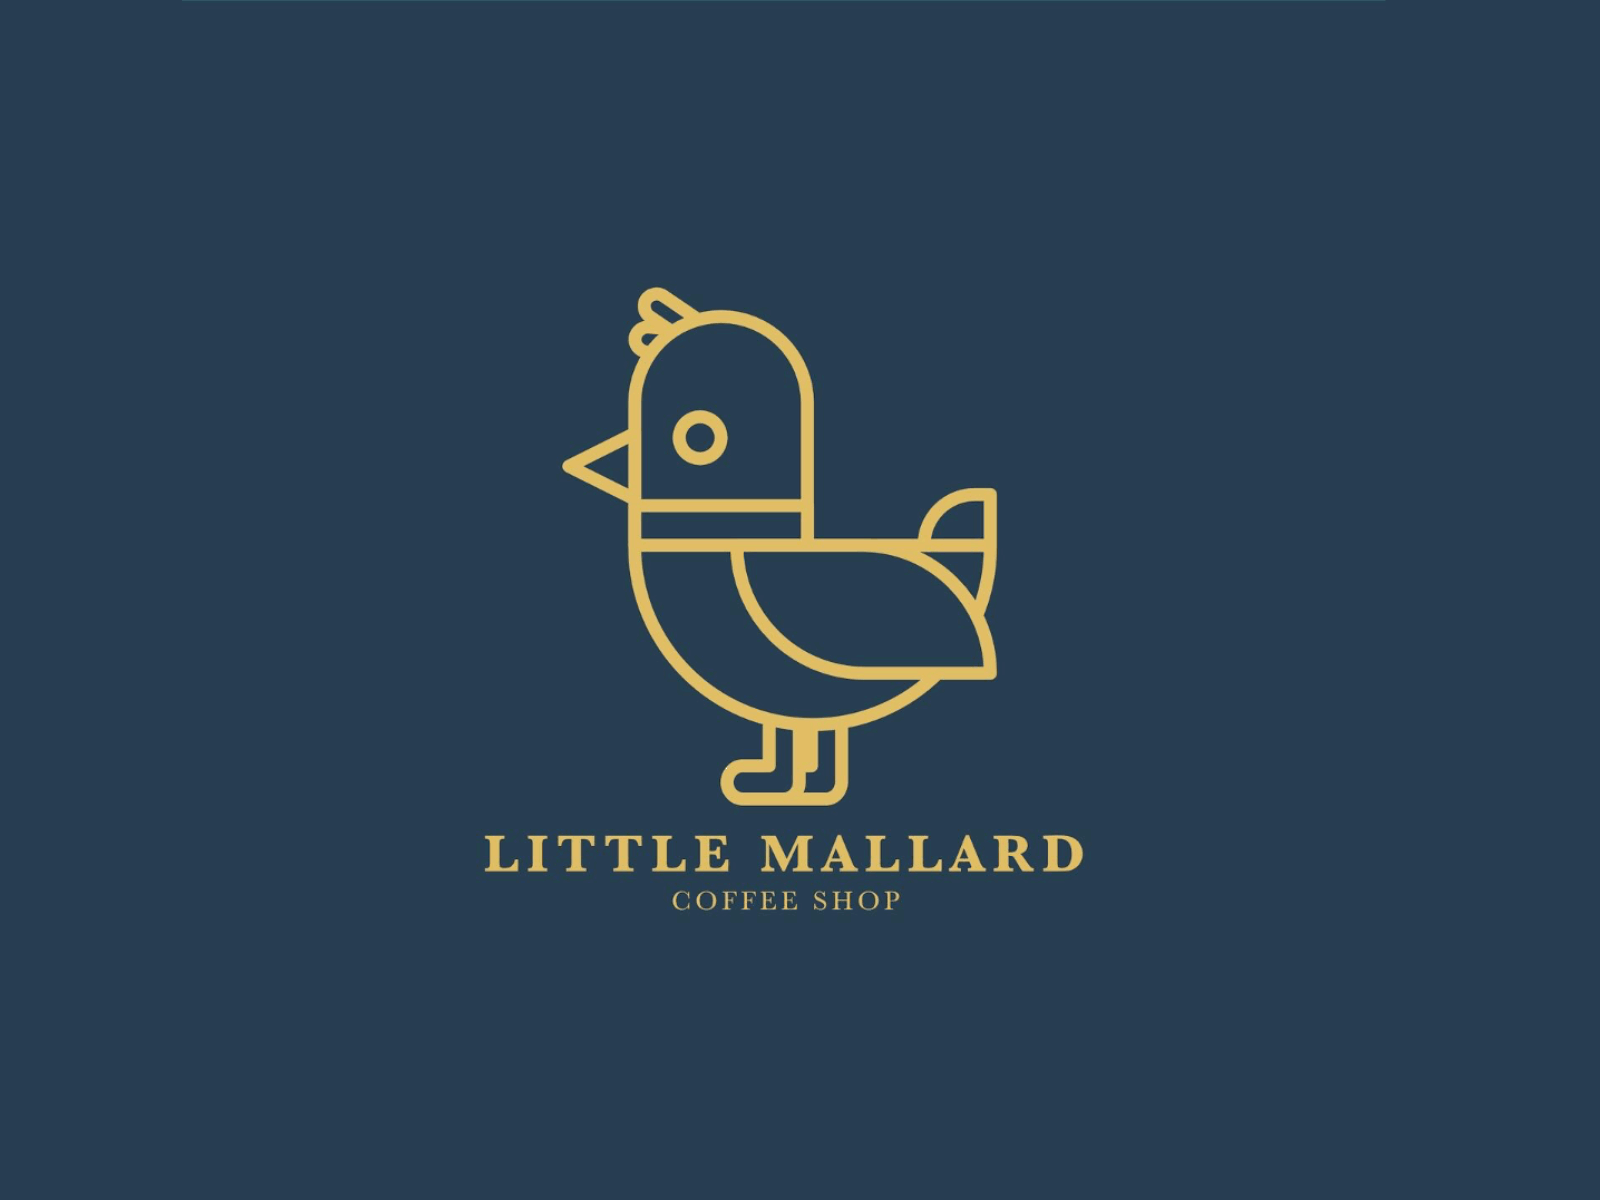 Little Mallard affinity animal bird brand design duck flat logo minimalist vector